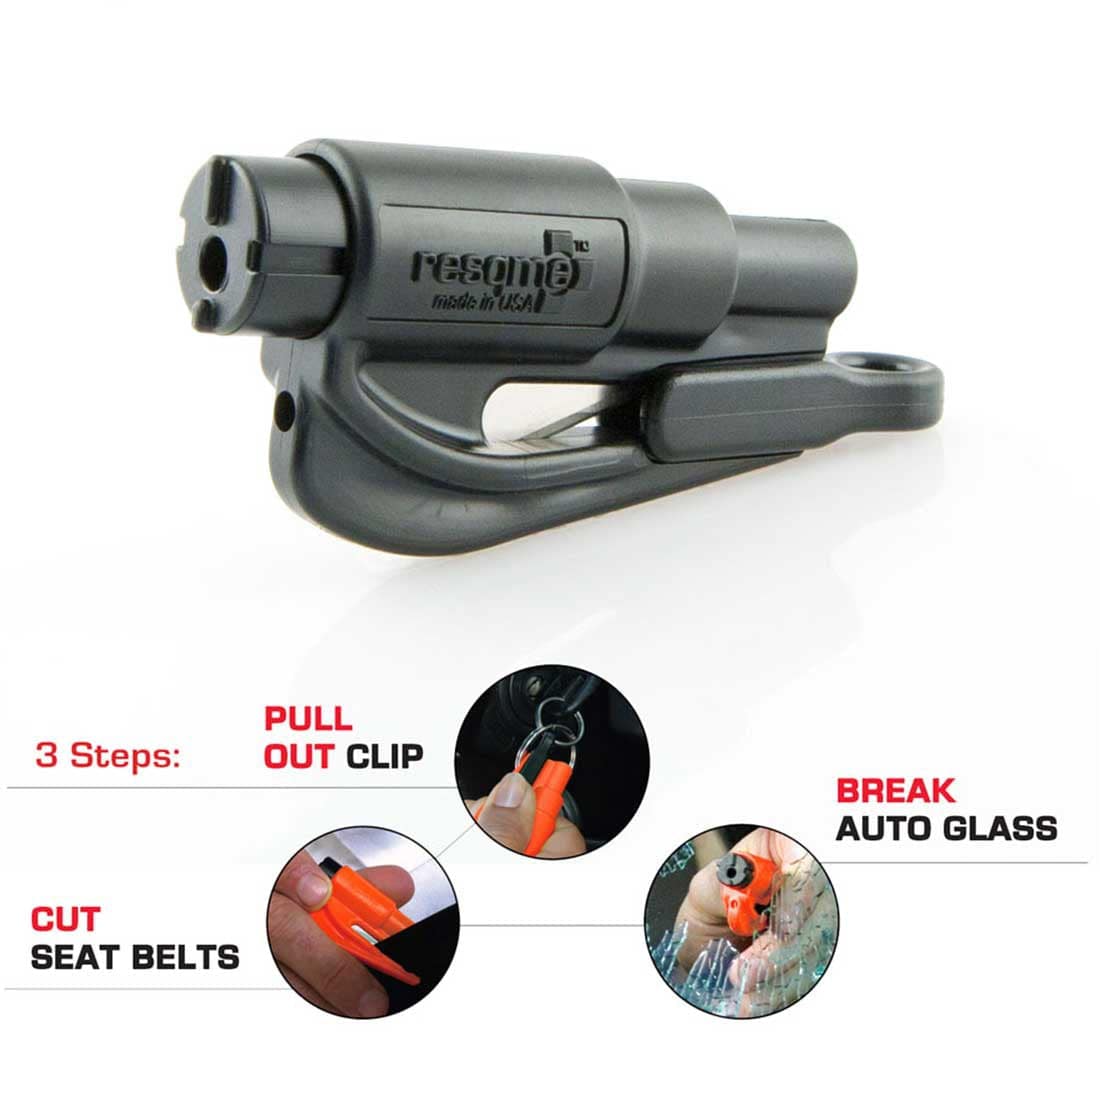 Rapid Assault Tools RSC2 Resqme Seatbelt Cutter & Window Breaker